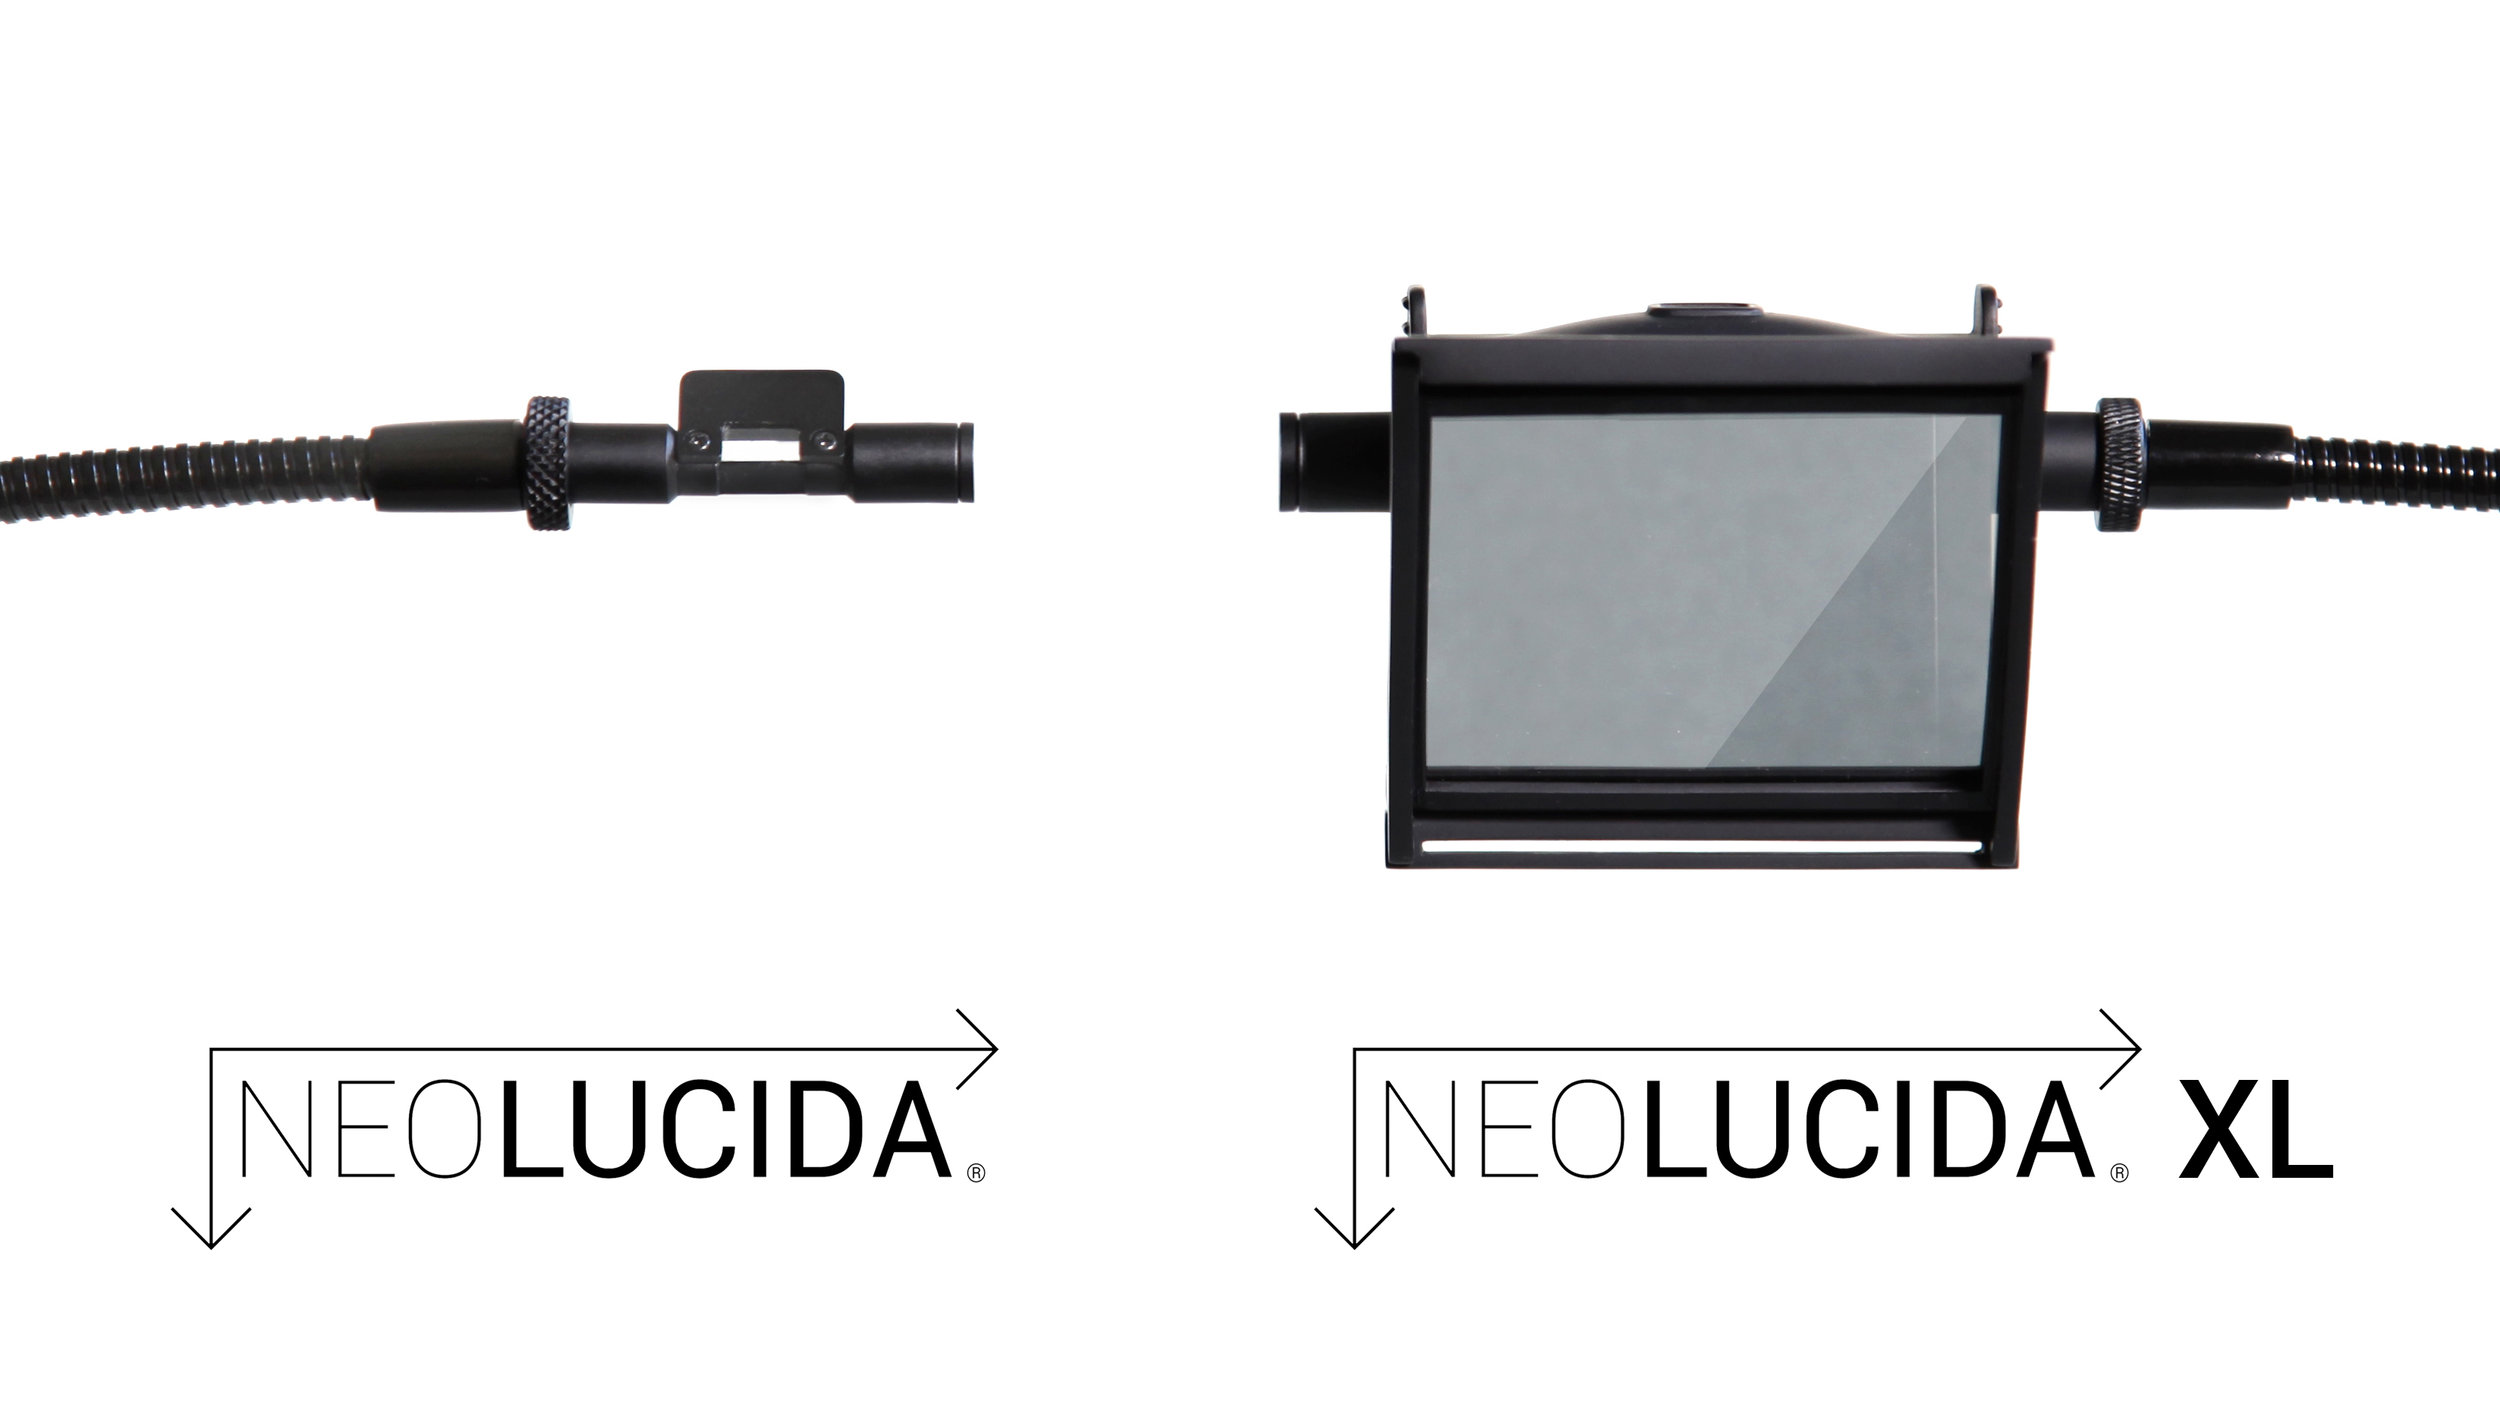 NeoLucida XL: a See-Through Camera Lucida Drawing Tool